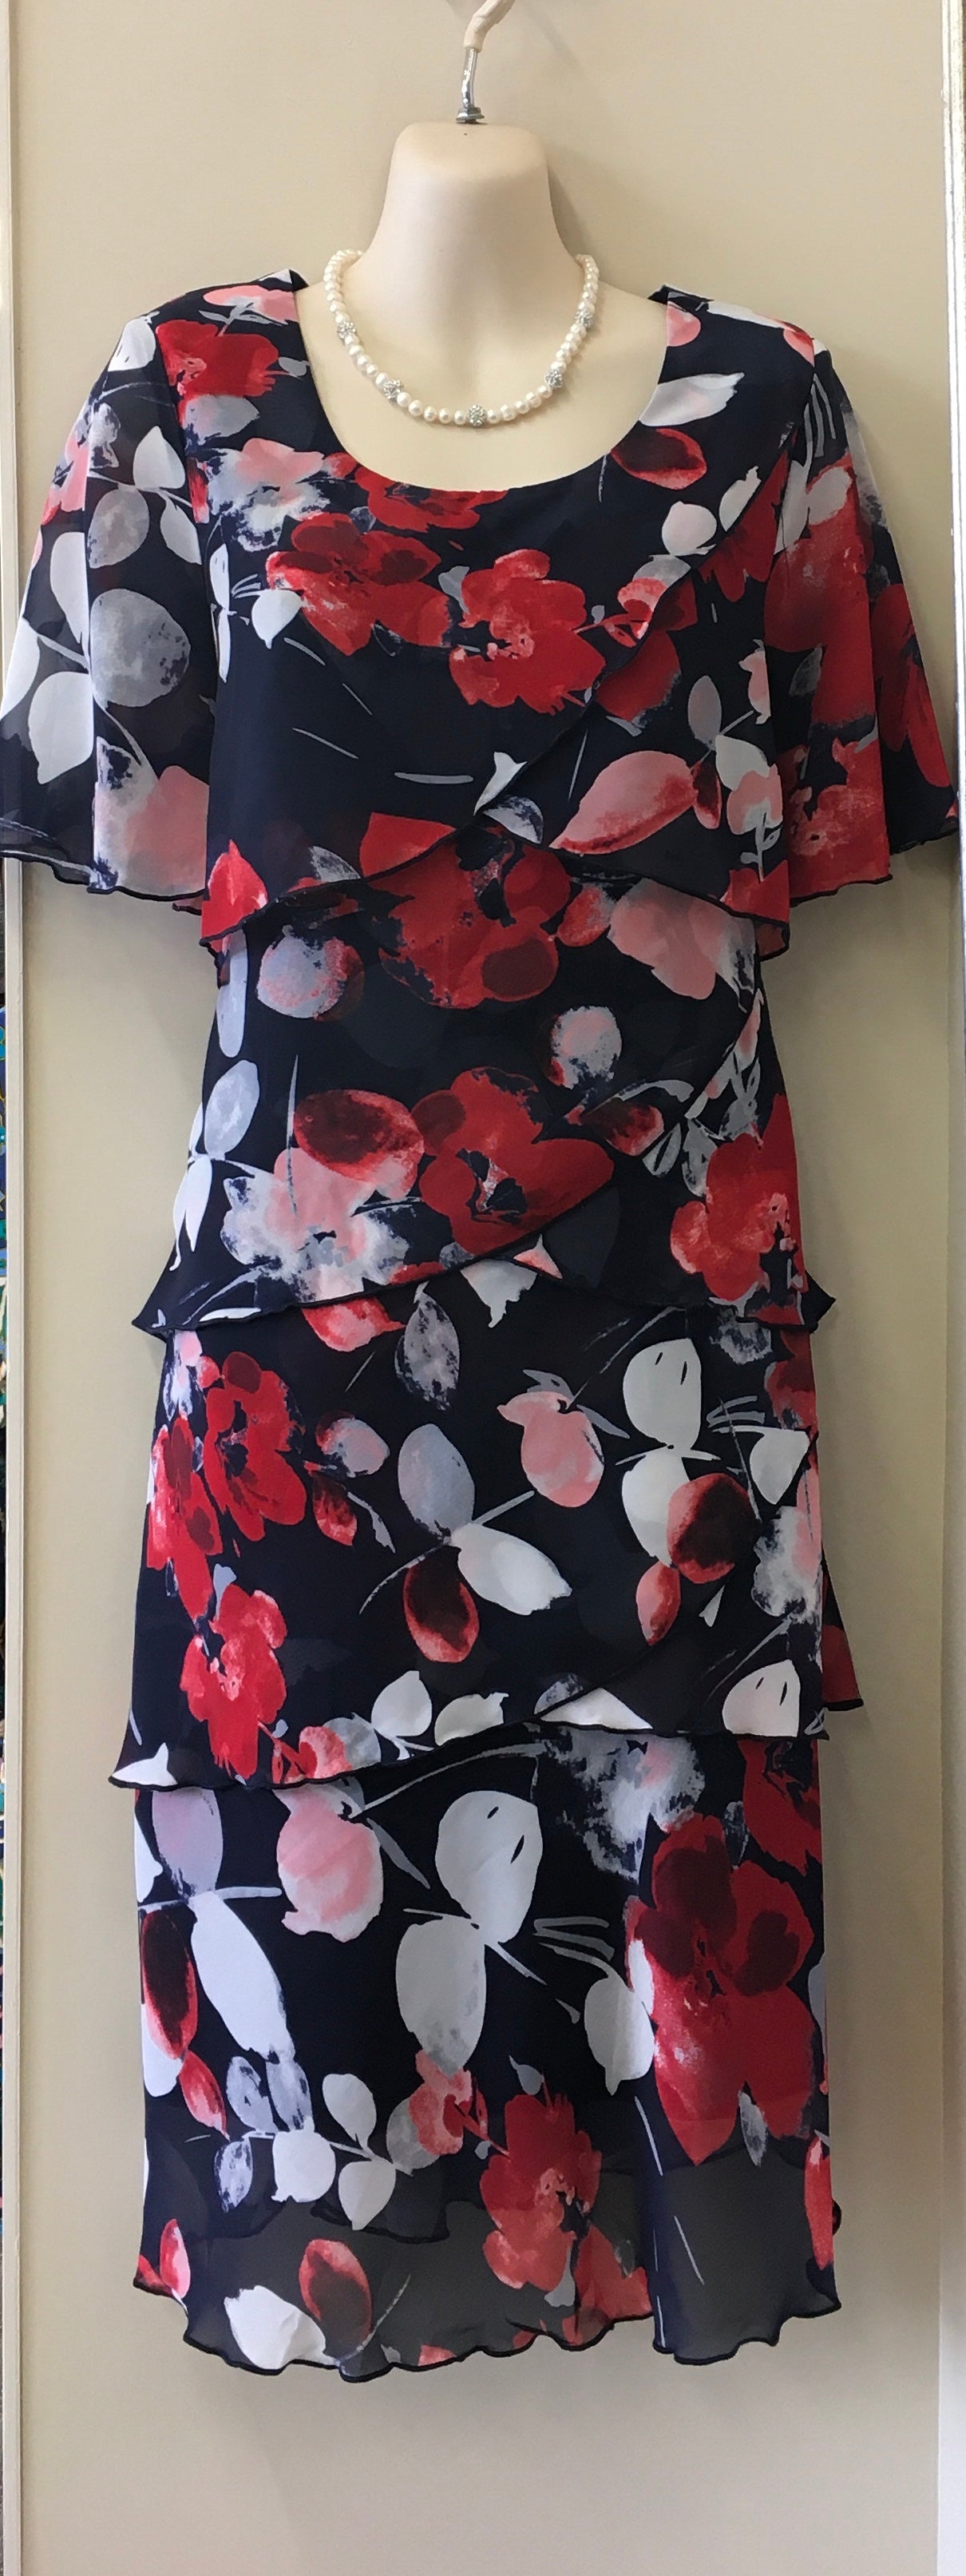 Vivid - Chiffon Layer Dress - 2735A-1 - Navy Floral - 1 size 18 left